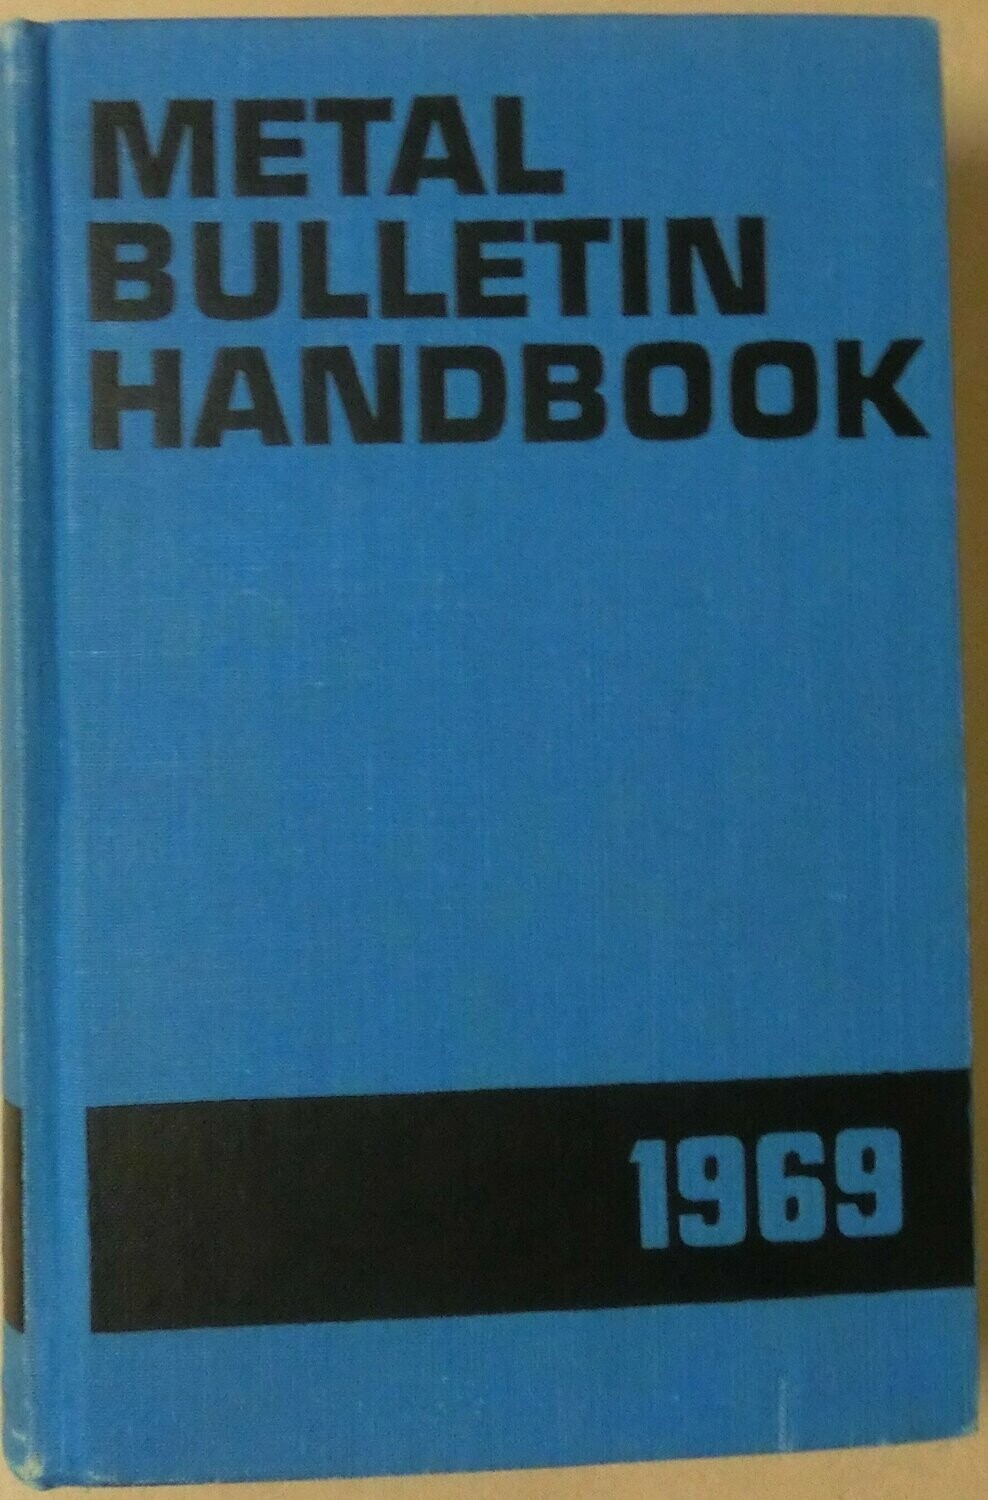 Metal Bulletin handbook 1969